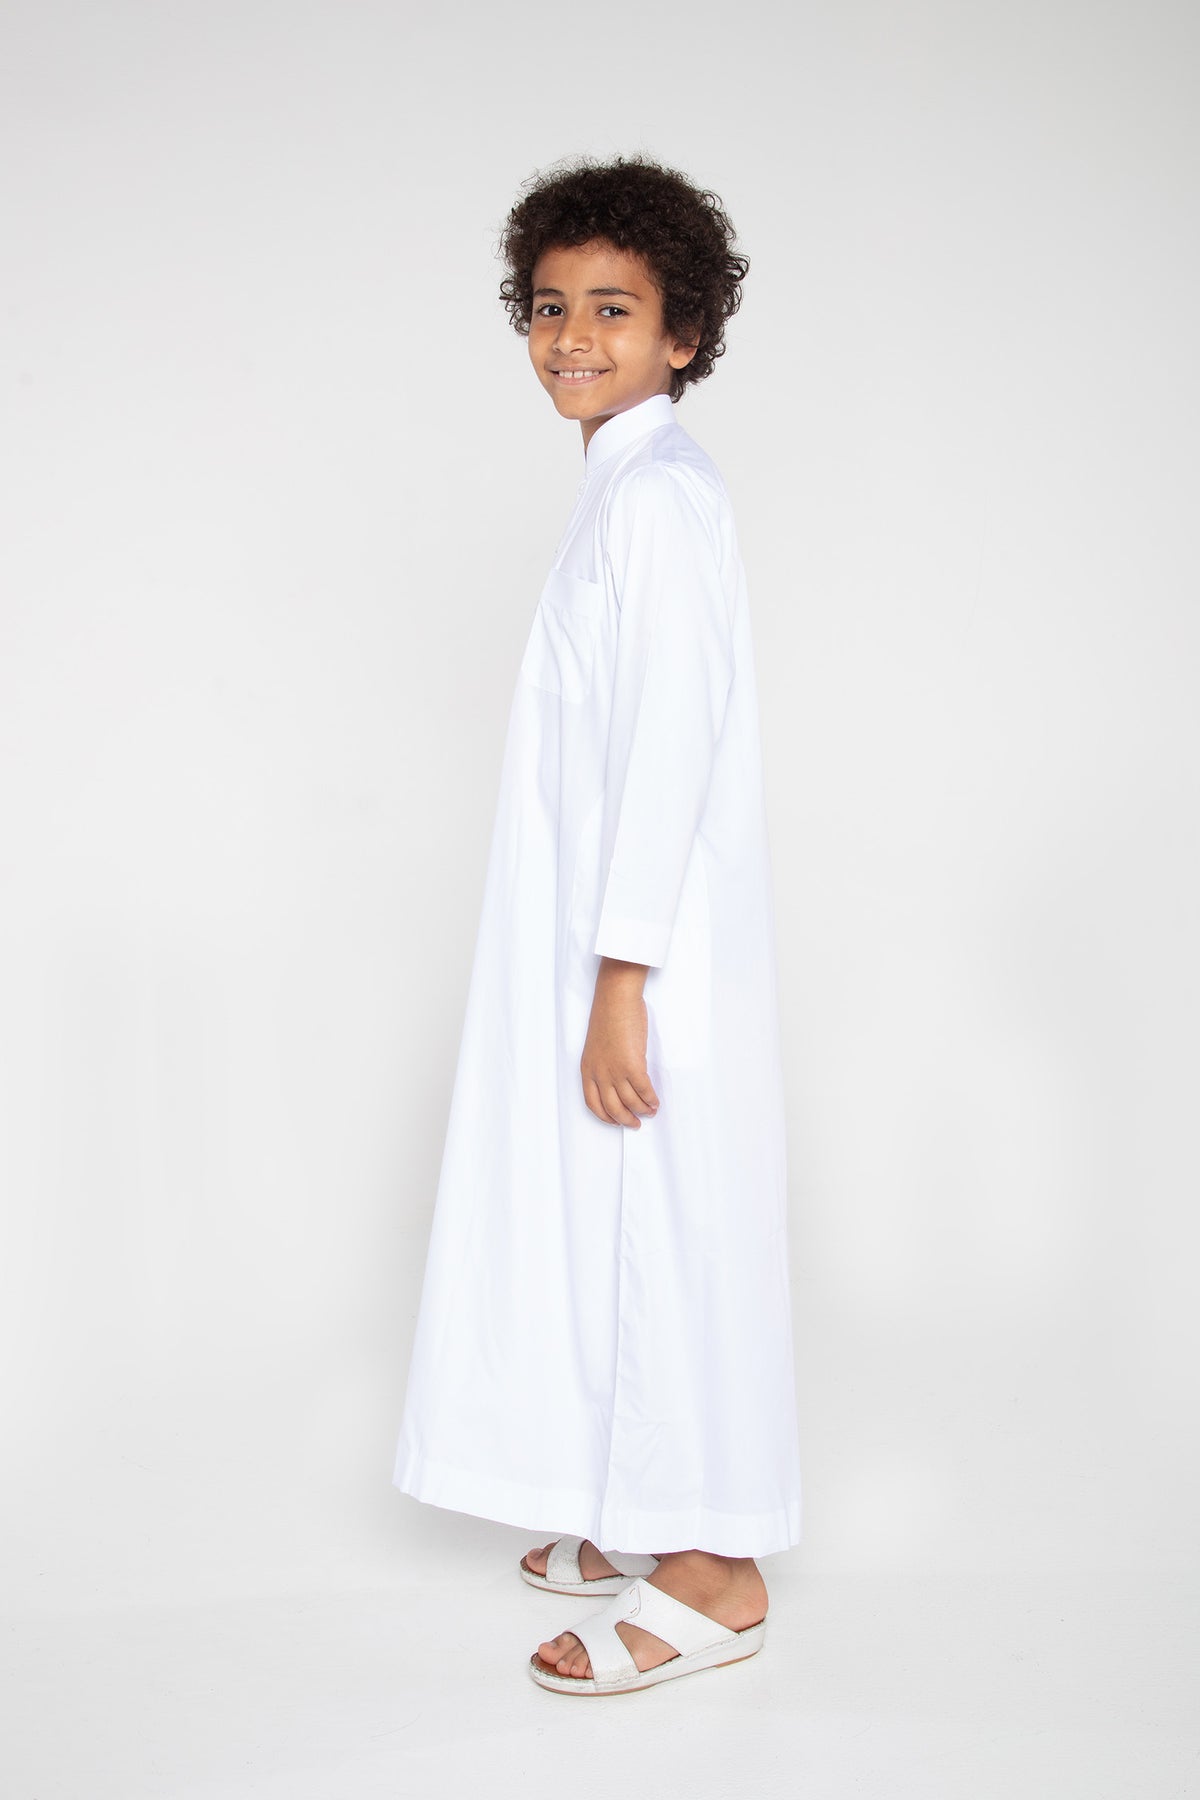 Haramain Style Soft Collar Kids - JLifestyle Store